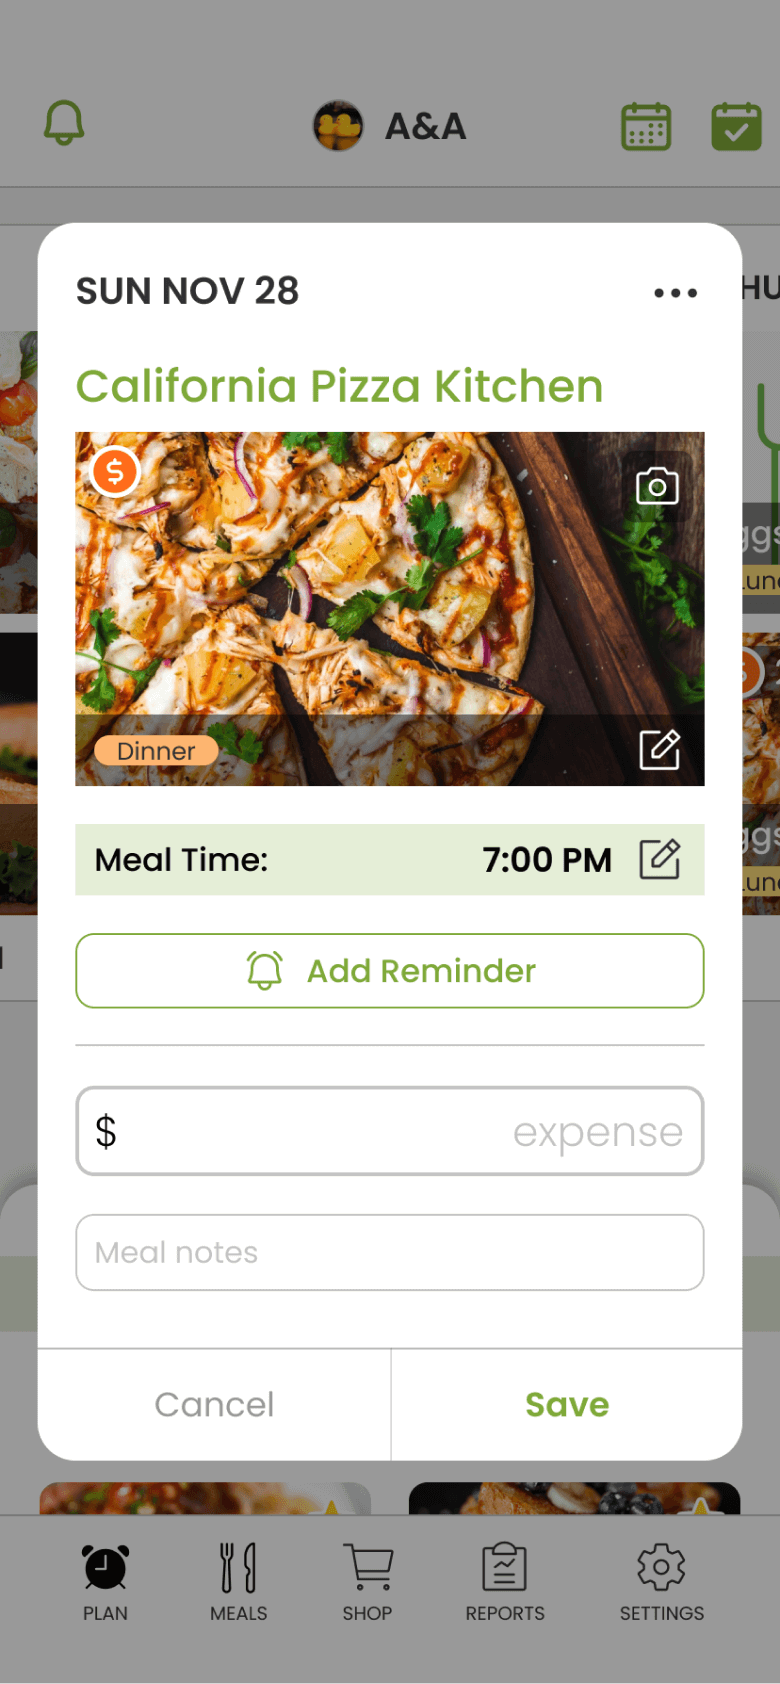 Planned meal properties screenshot